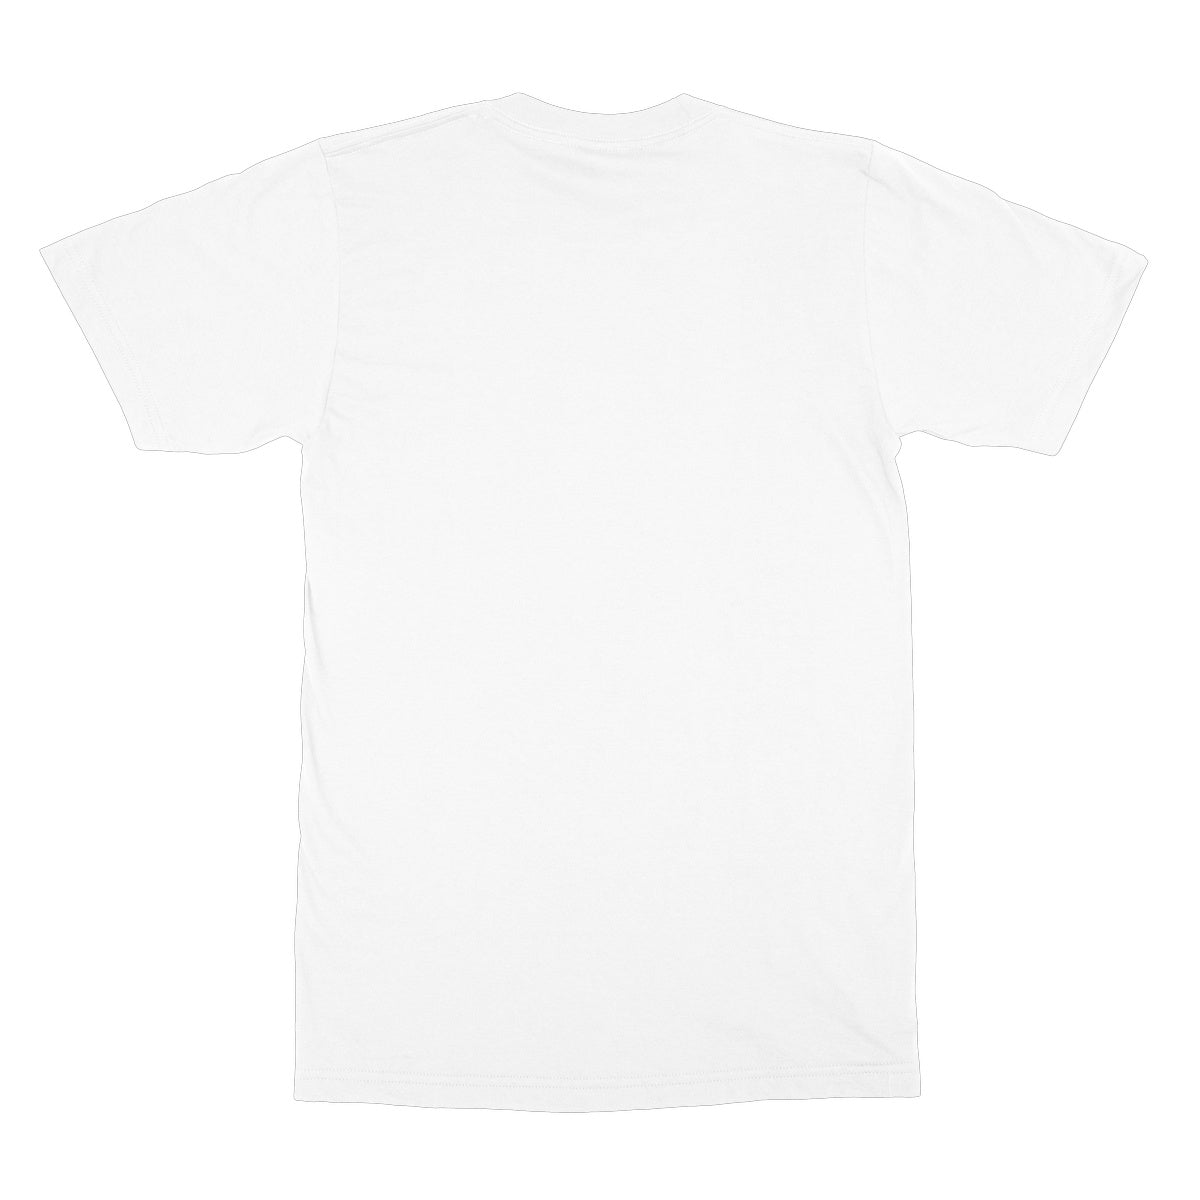 Warhol Style Banjos T-Shirt